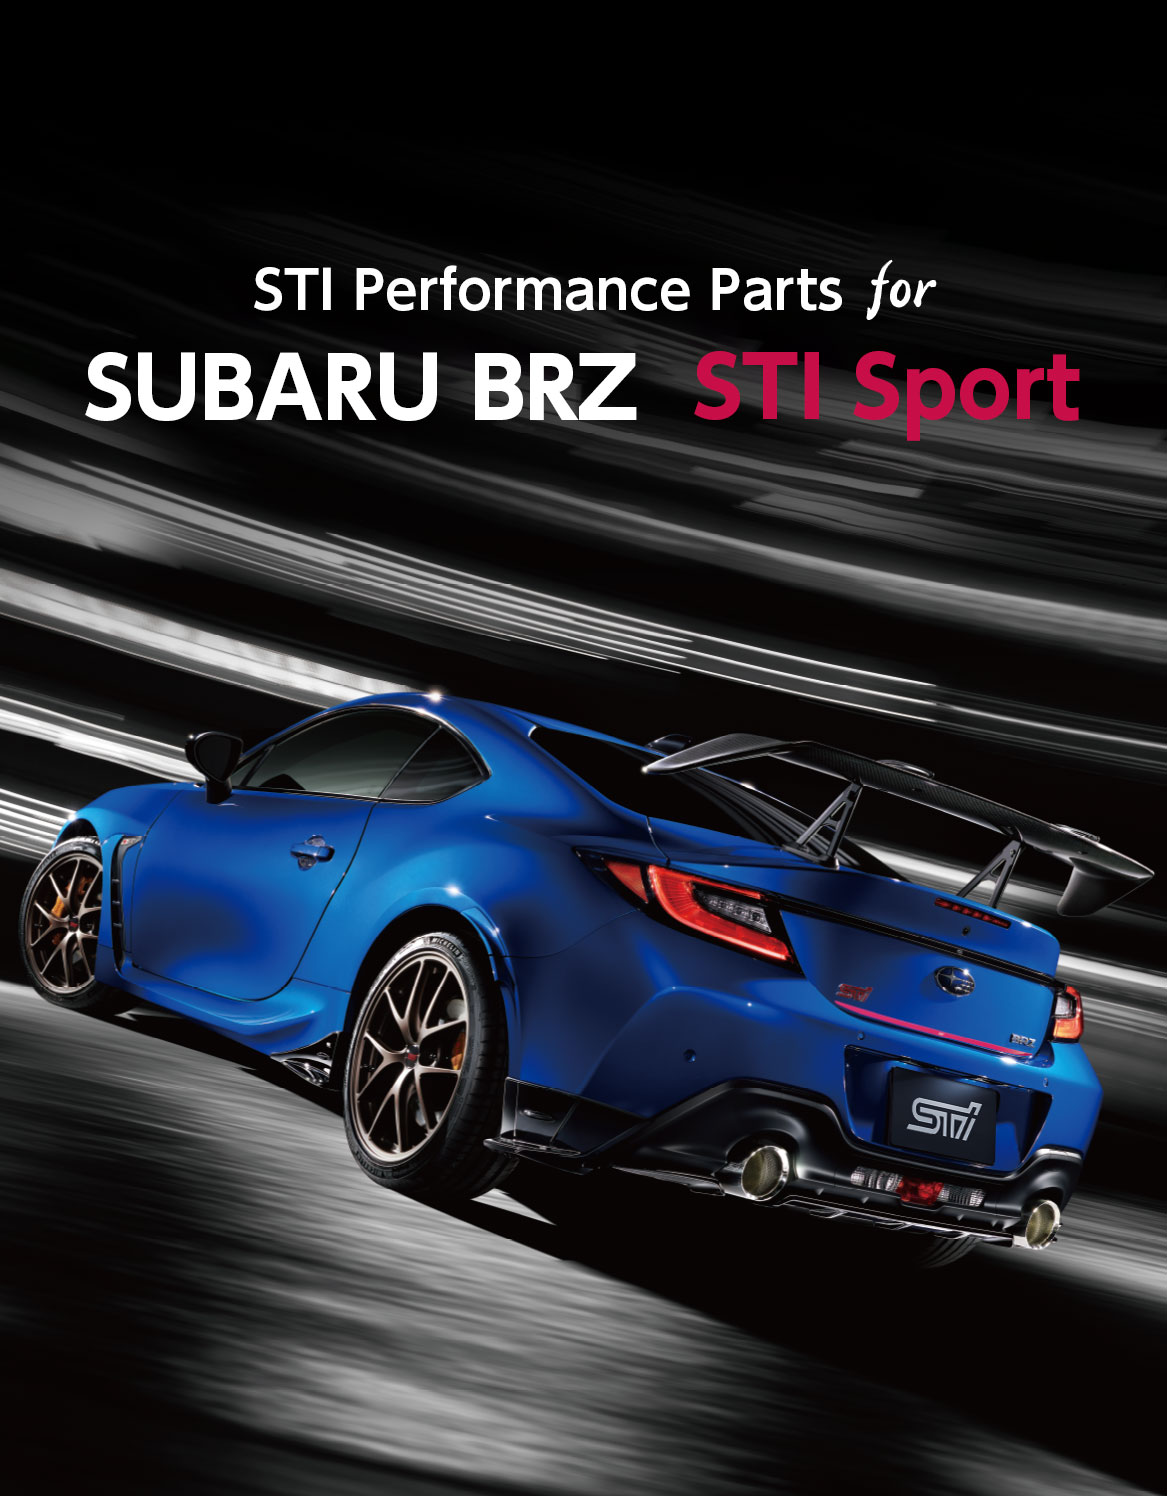 STI Performance Parts for SUBARU BRZ STI Sport